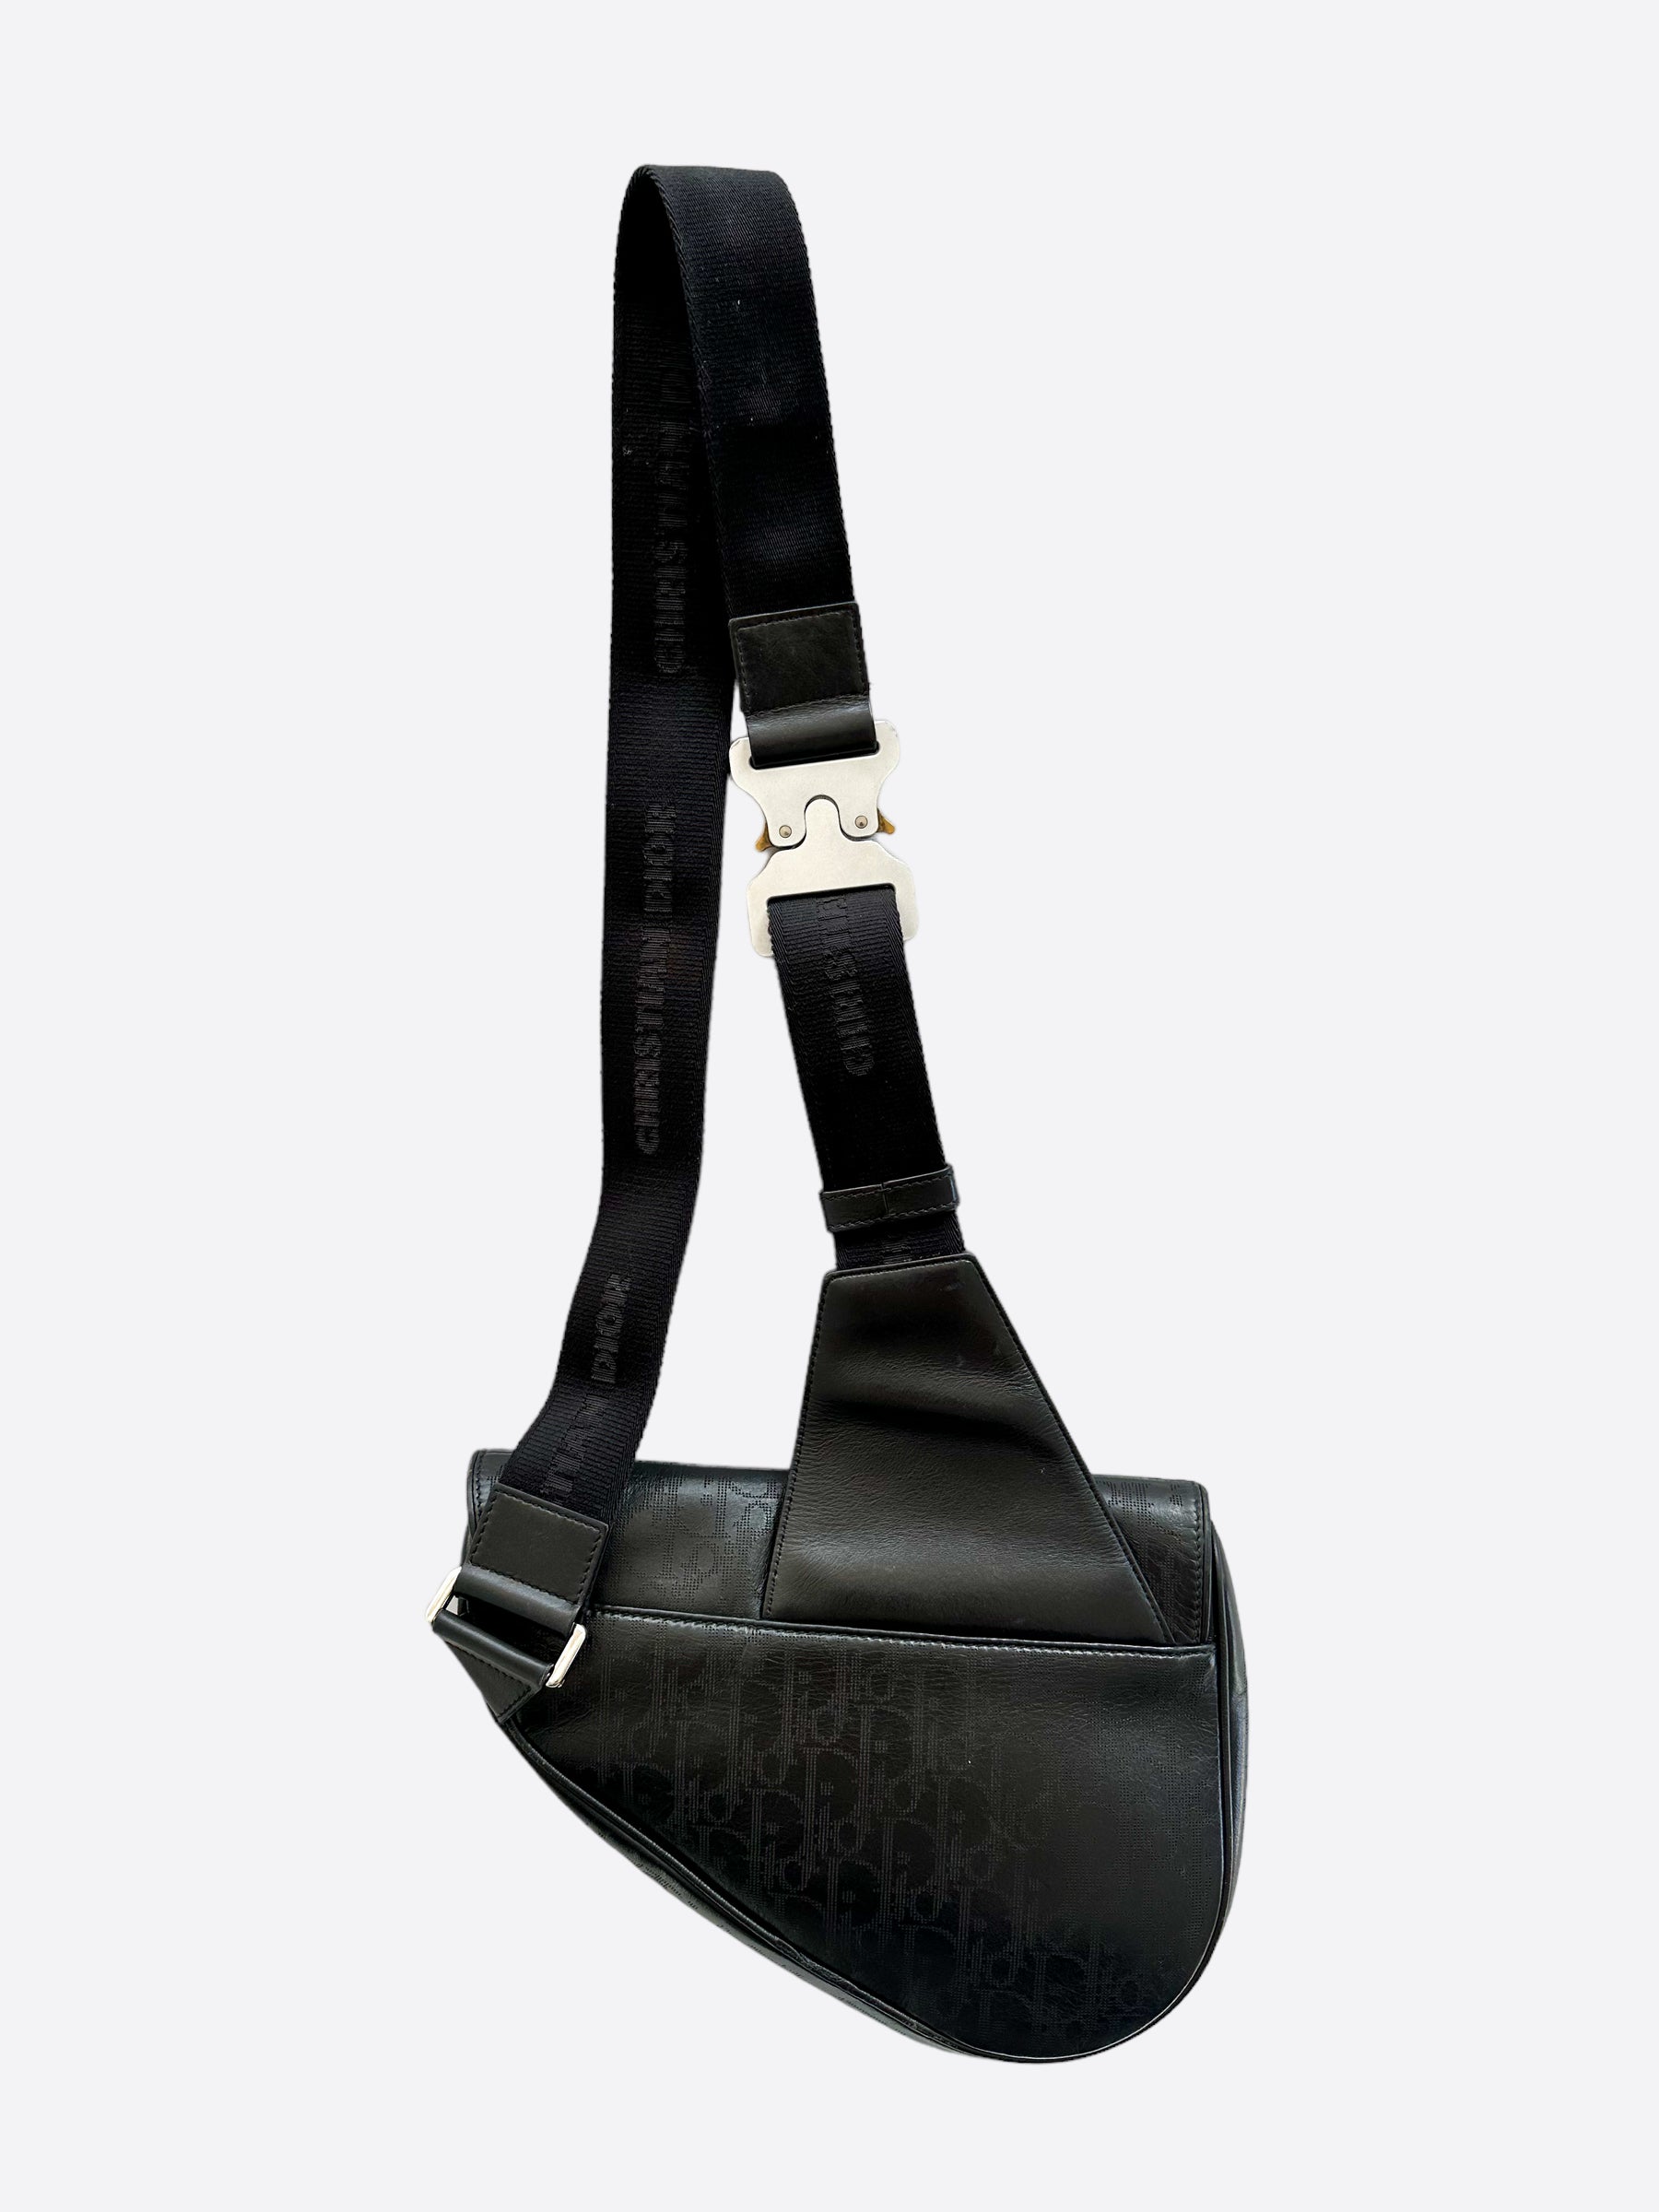 DIOR Saddle Bag Black Dior Oblique Galaxy Leather - Men